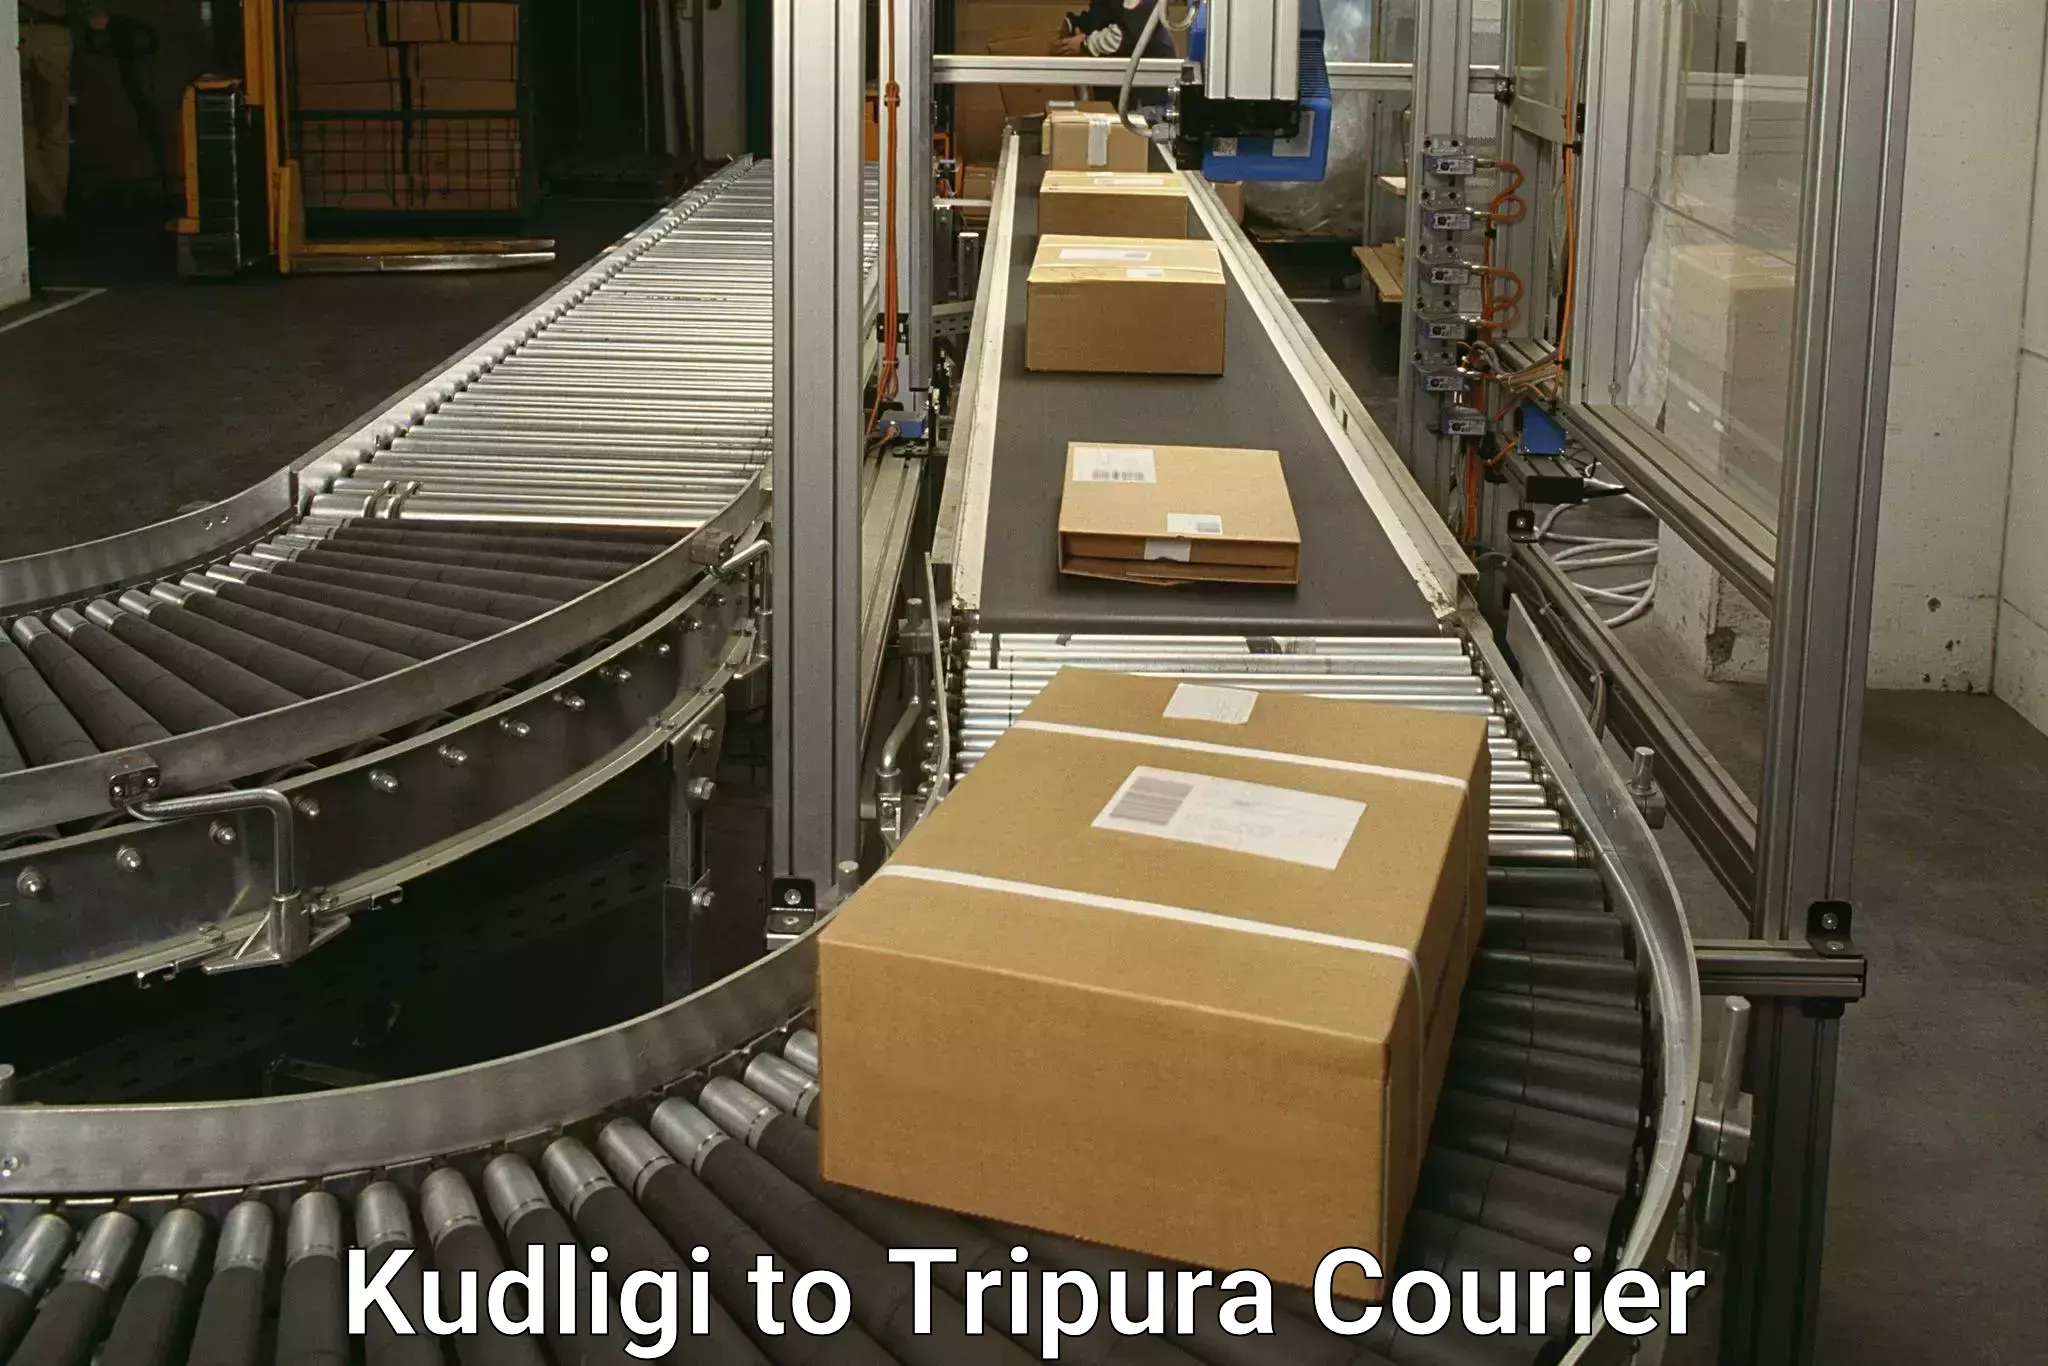 Courier service comparison Kudligi to Agartala